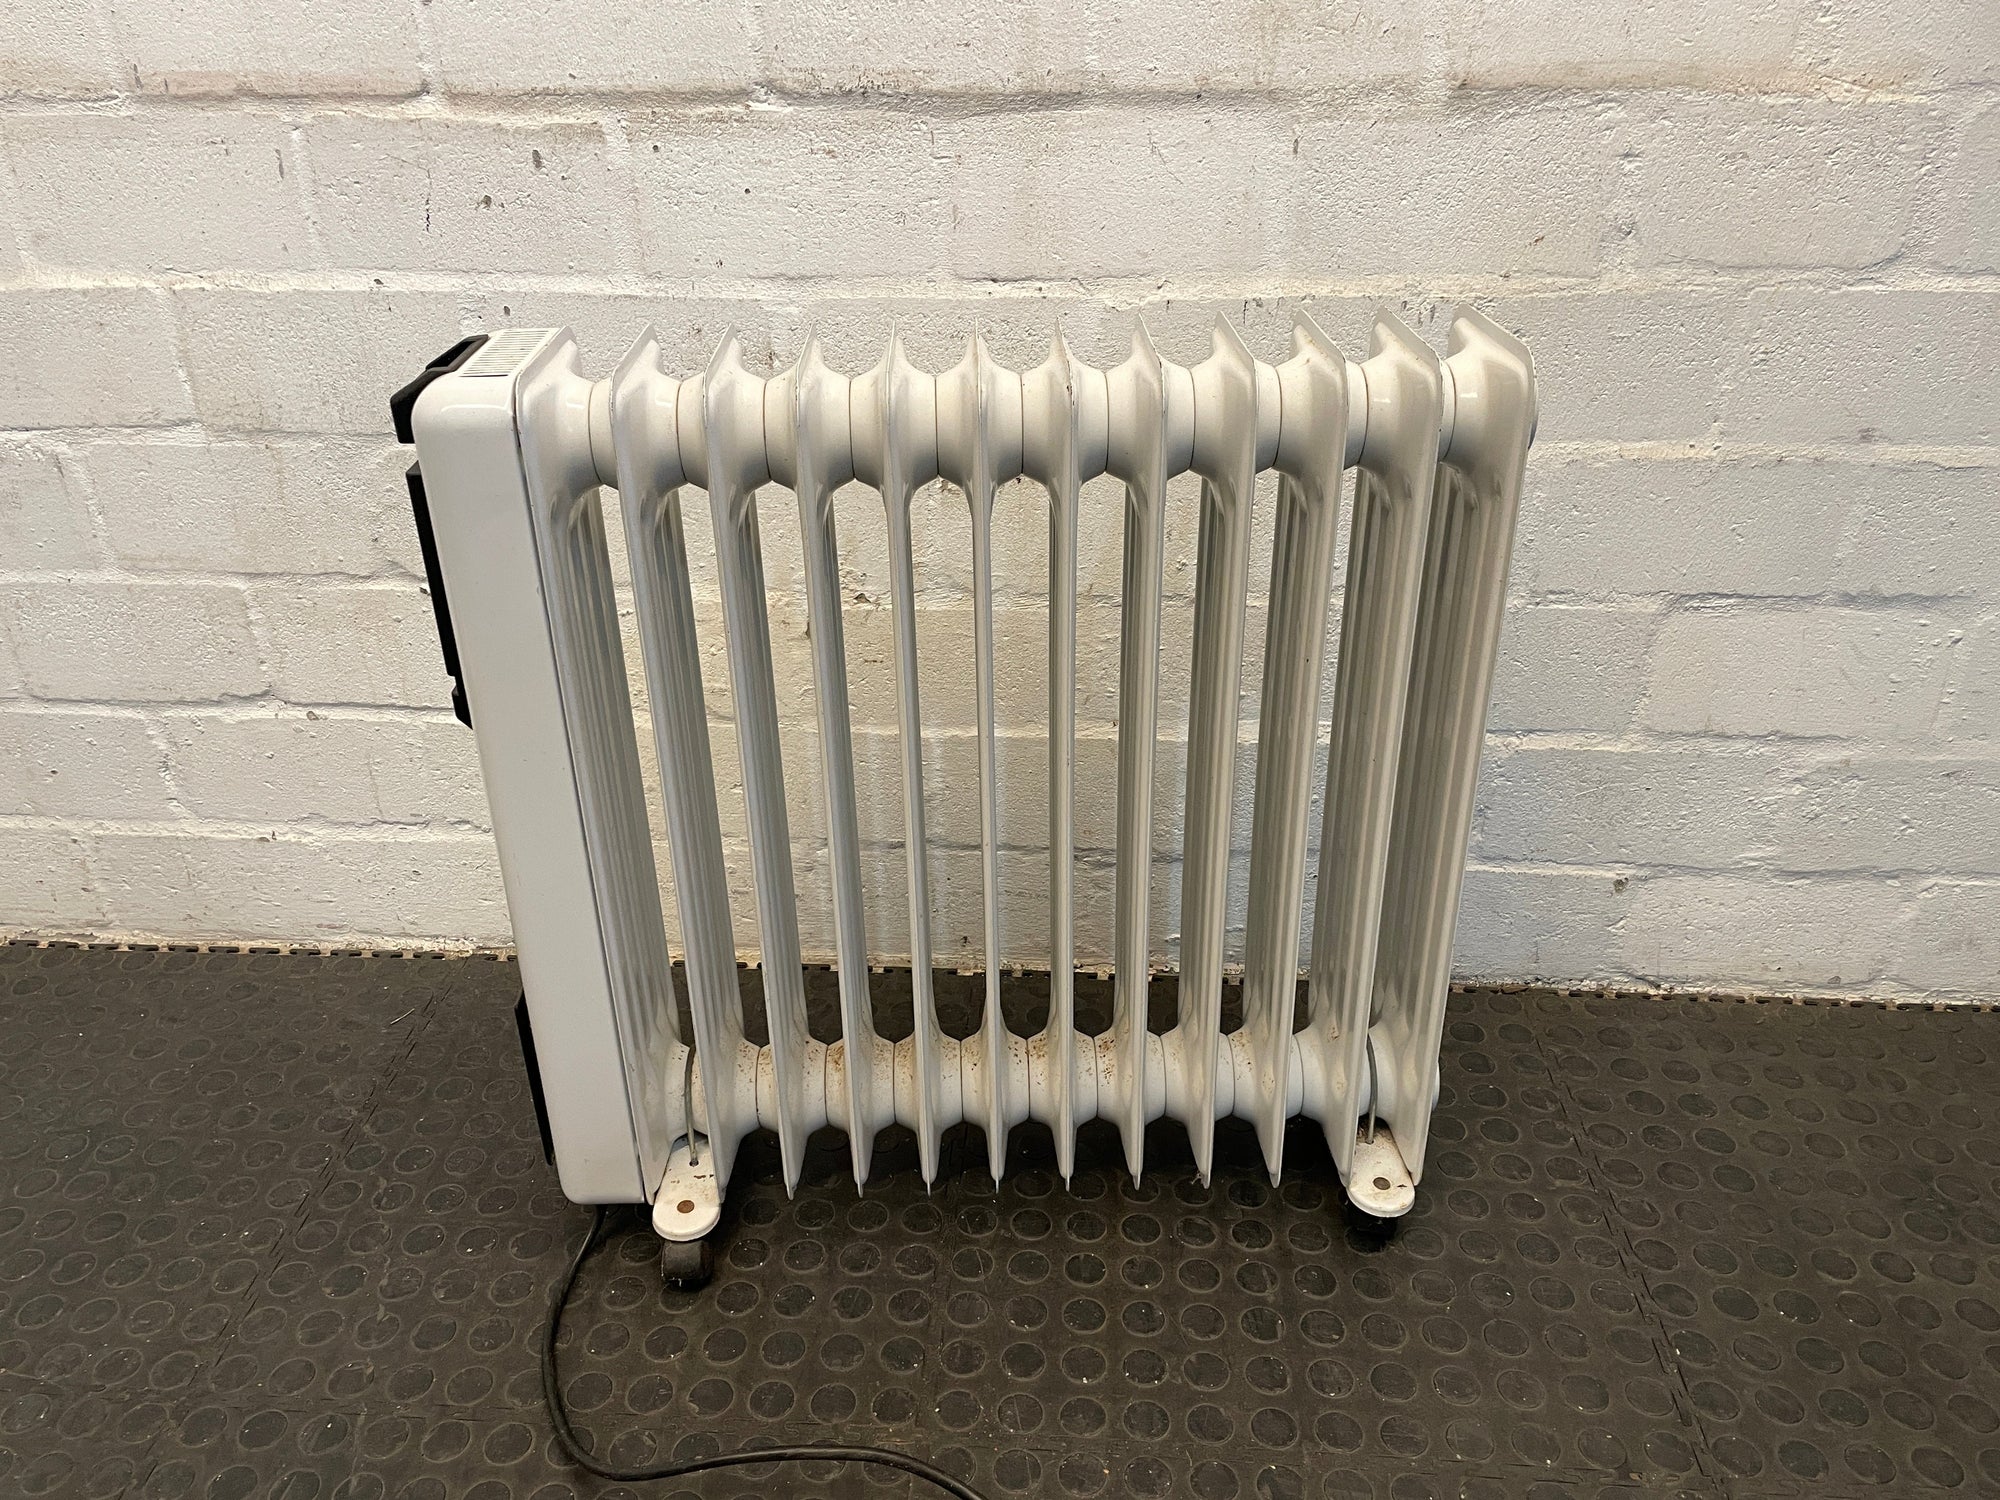 Calibra Heater - PRICE DROP